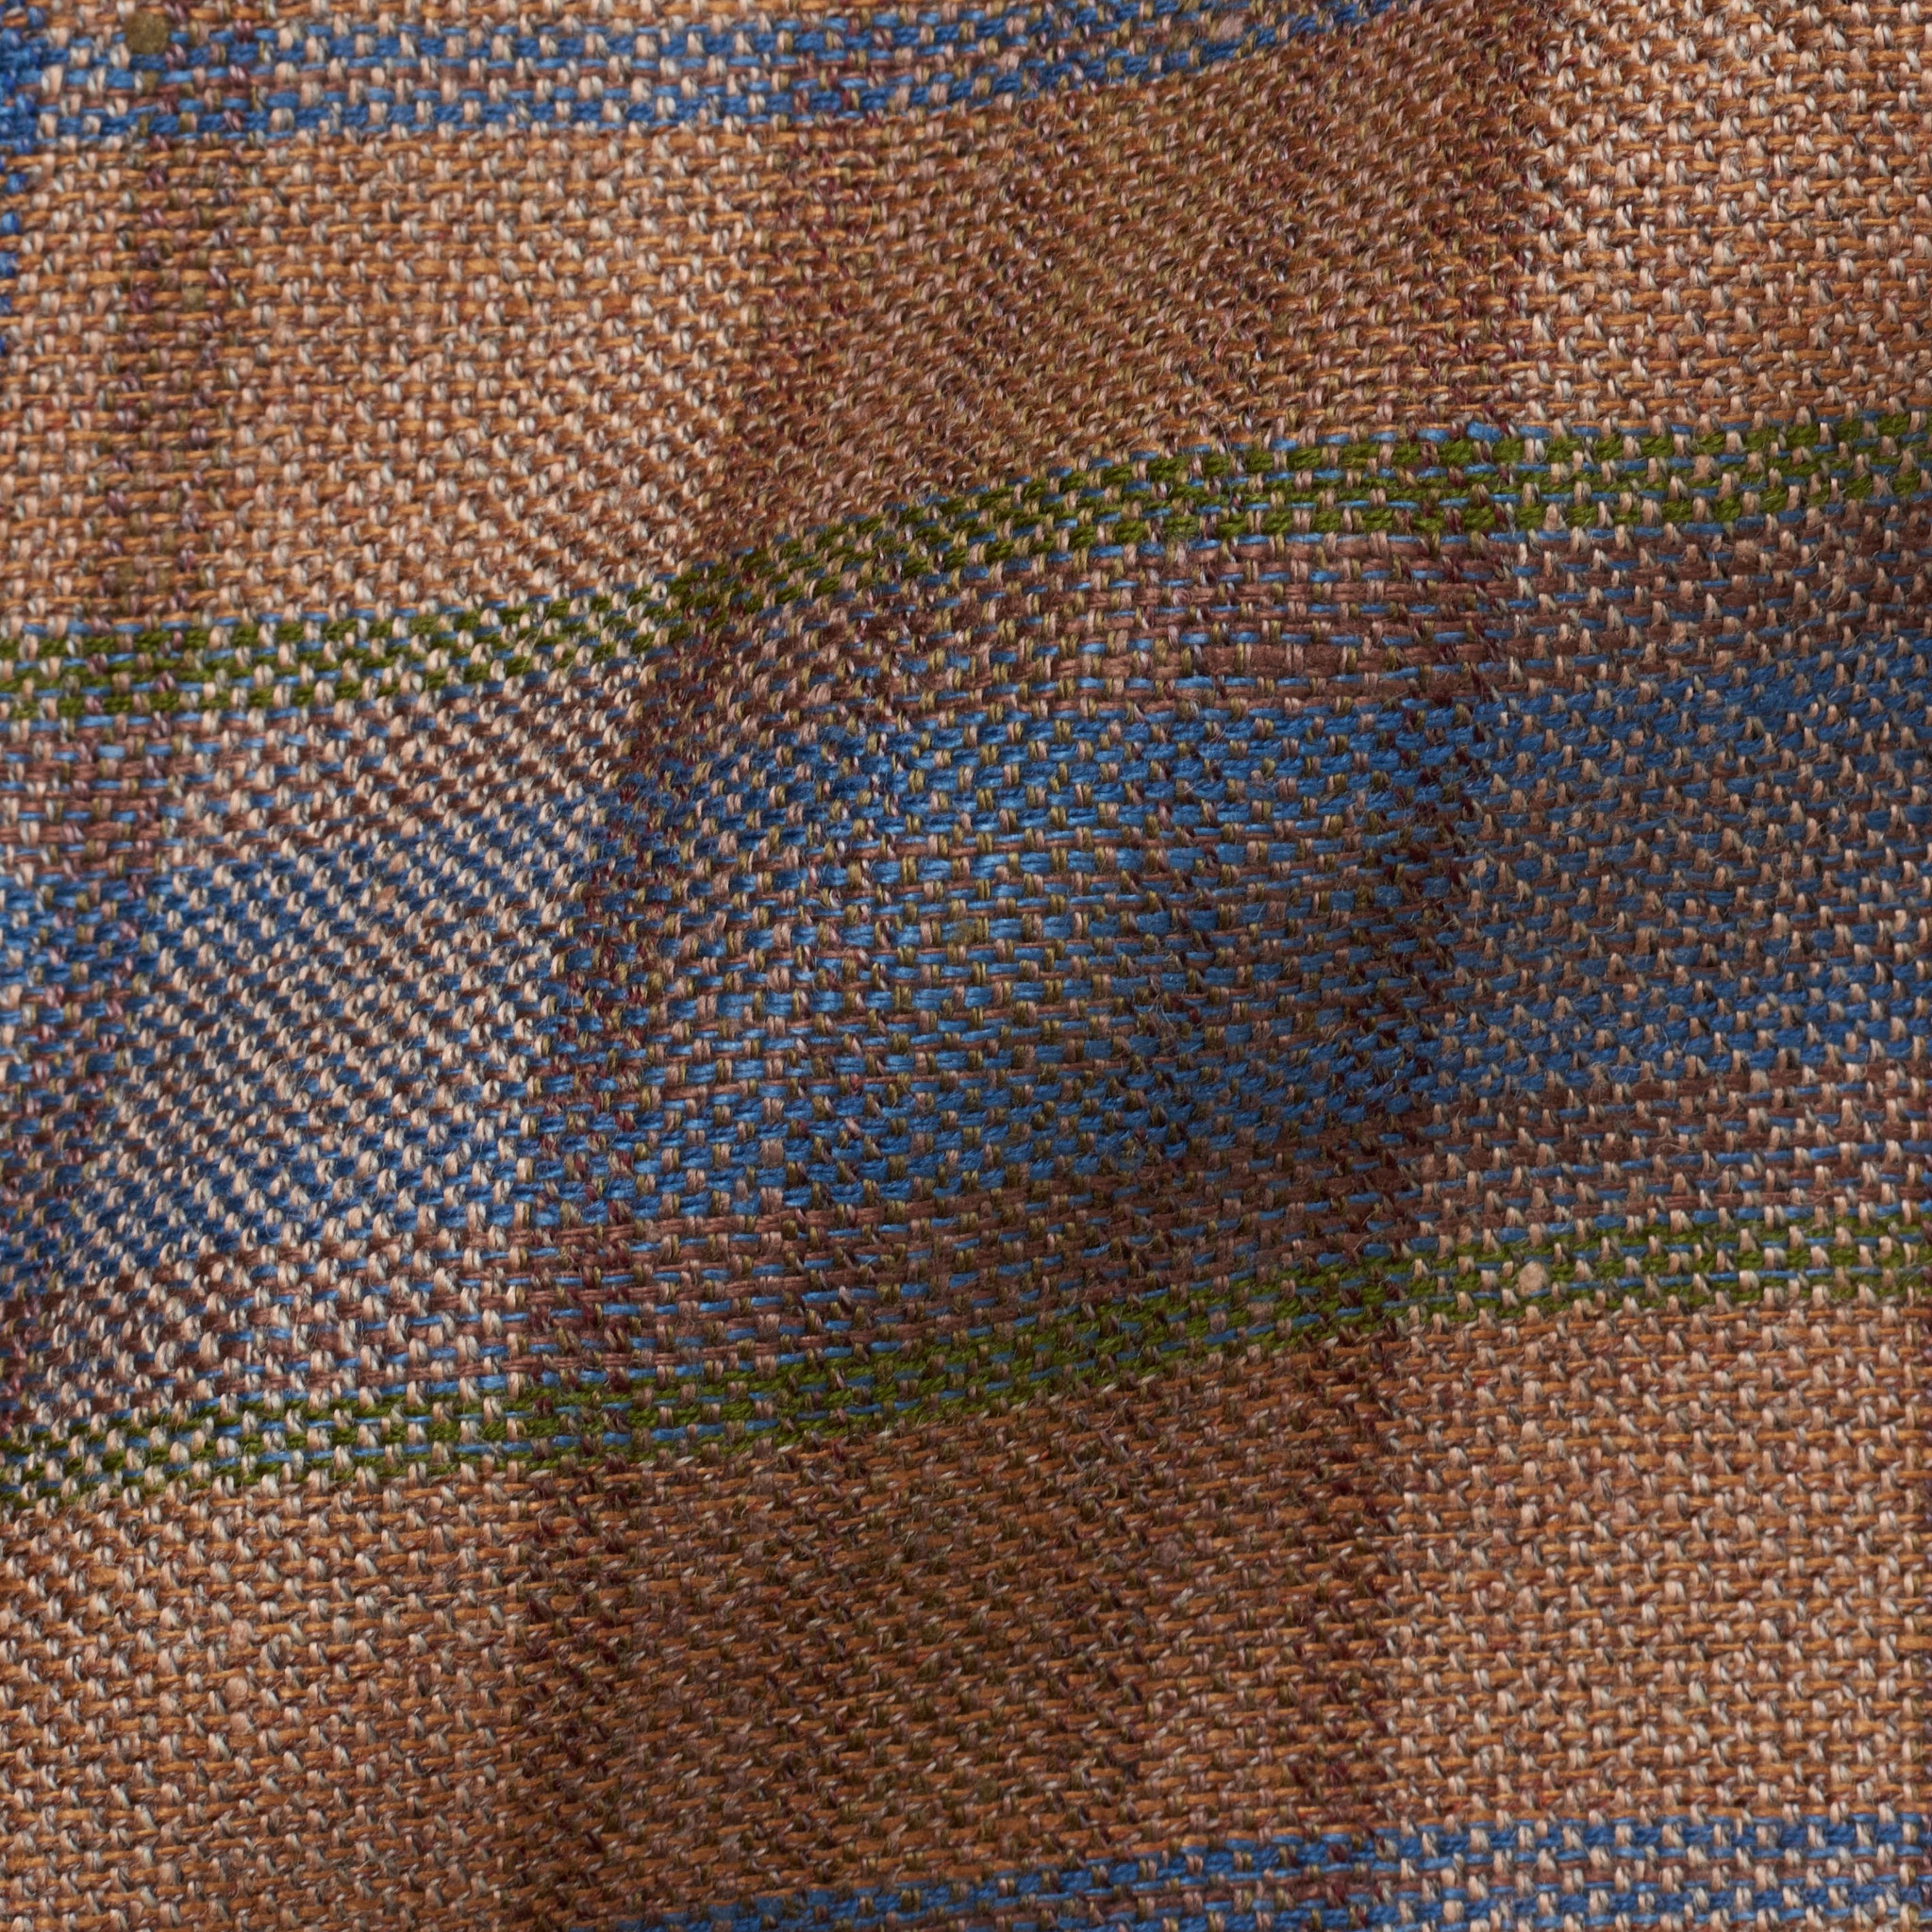 BOGLIOLI "K. Jacket" Plaid Linen-Wool Unlined Peak Lapel Jacket EU 48 NEW US 38 BOGLIOLI